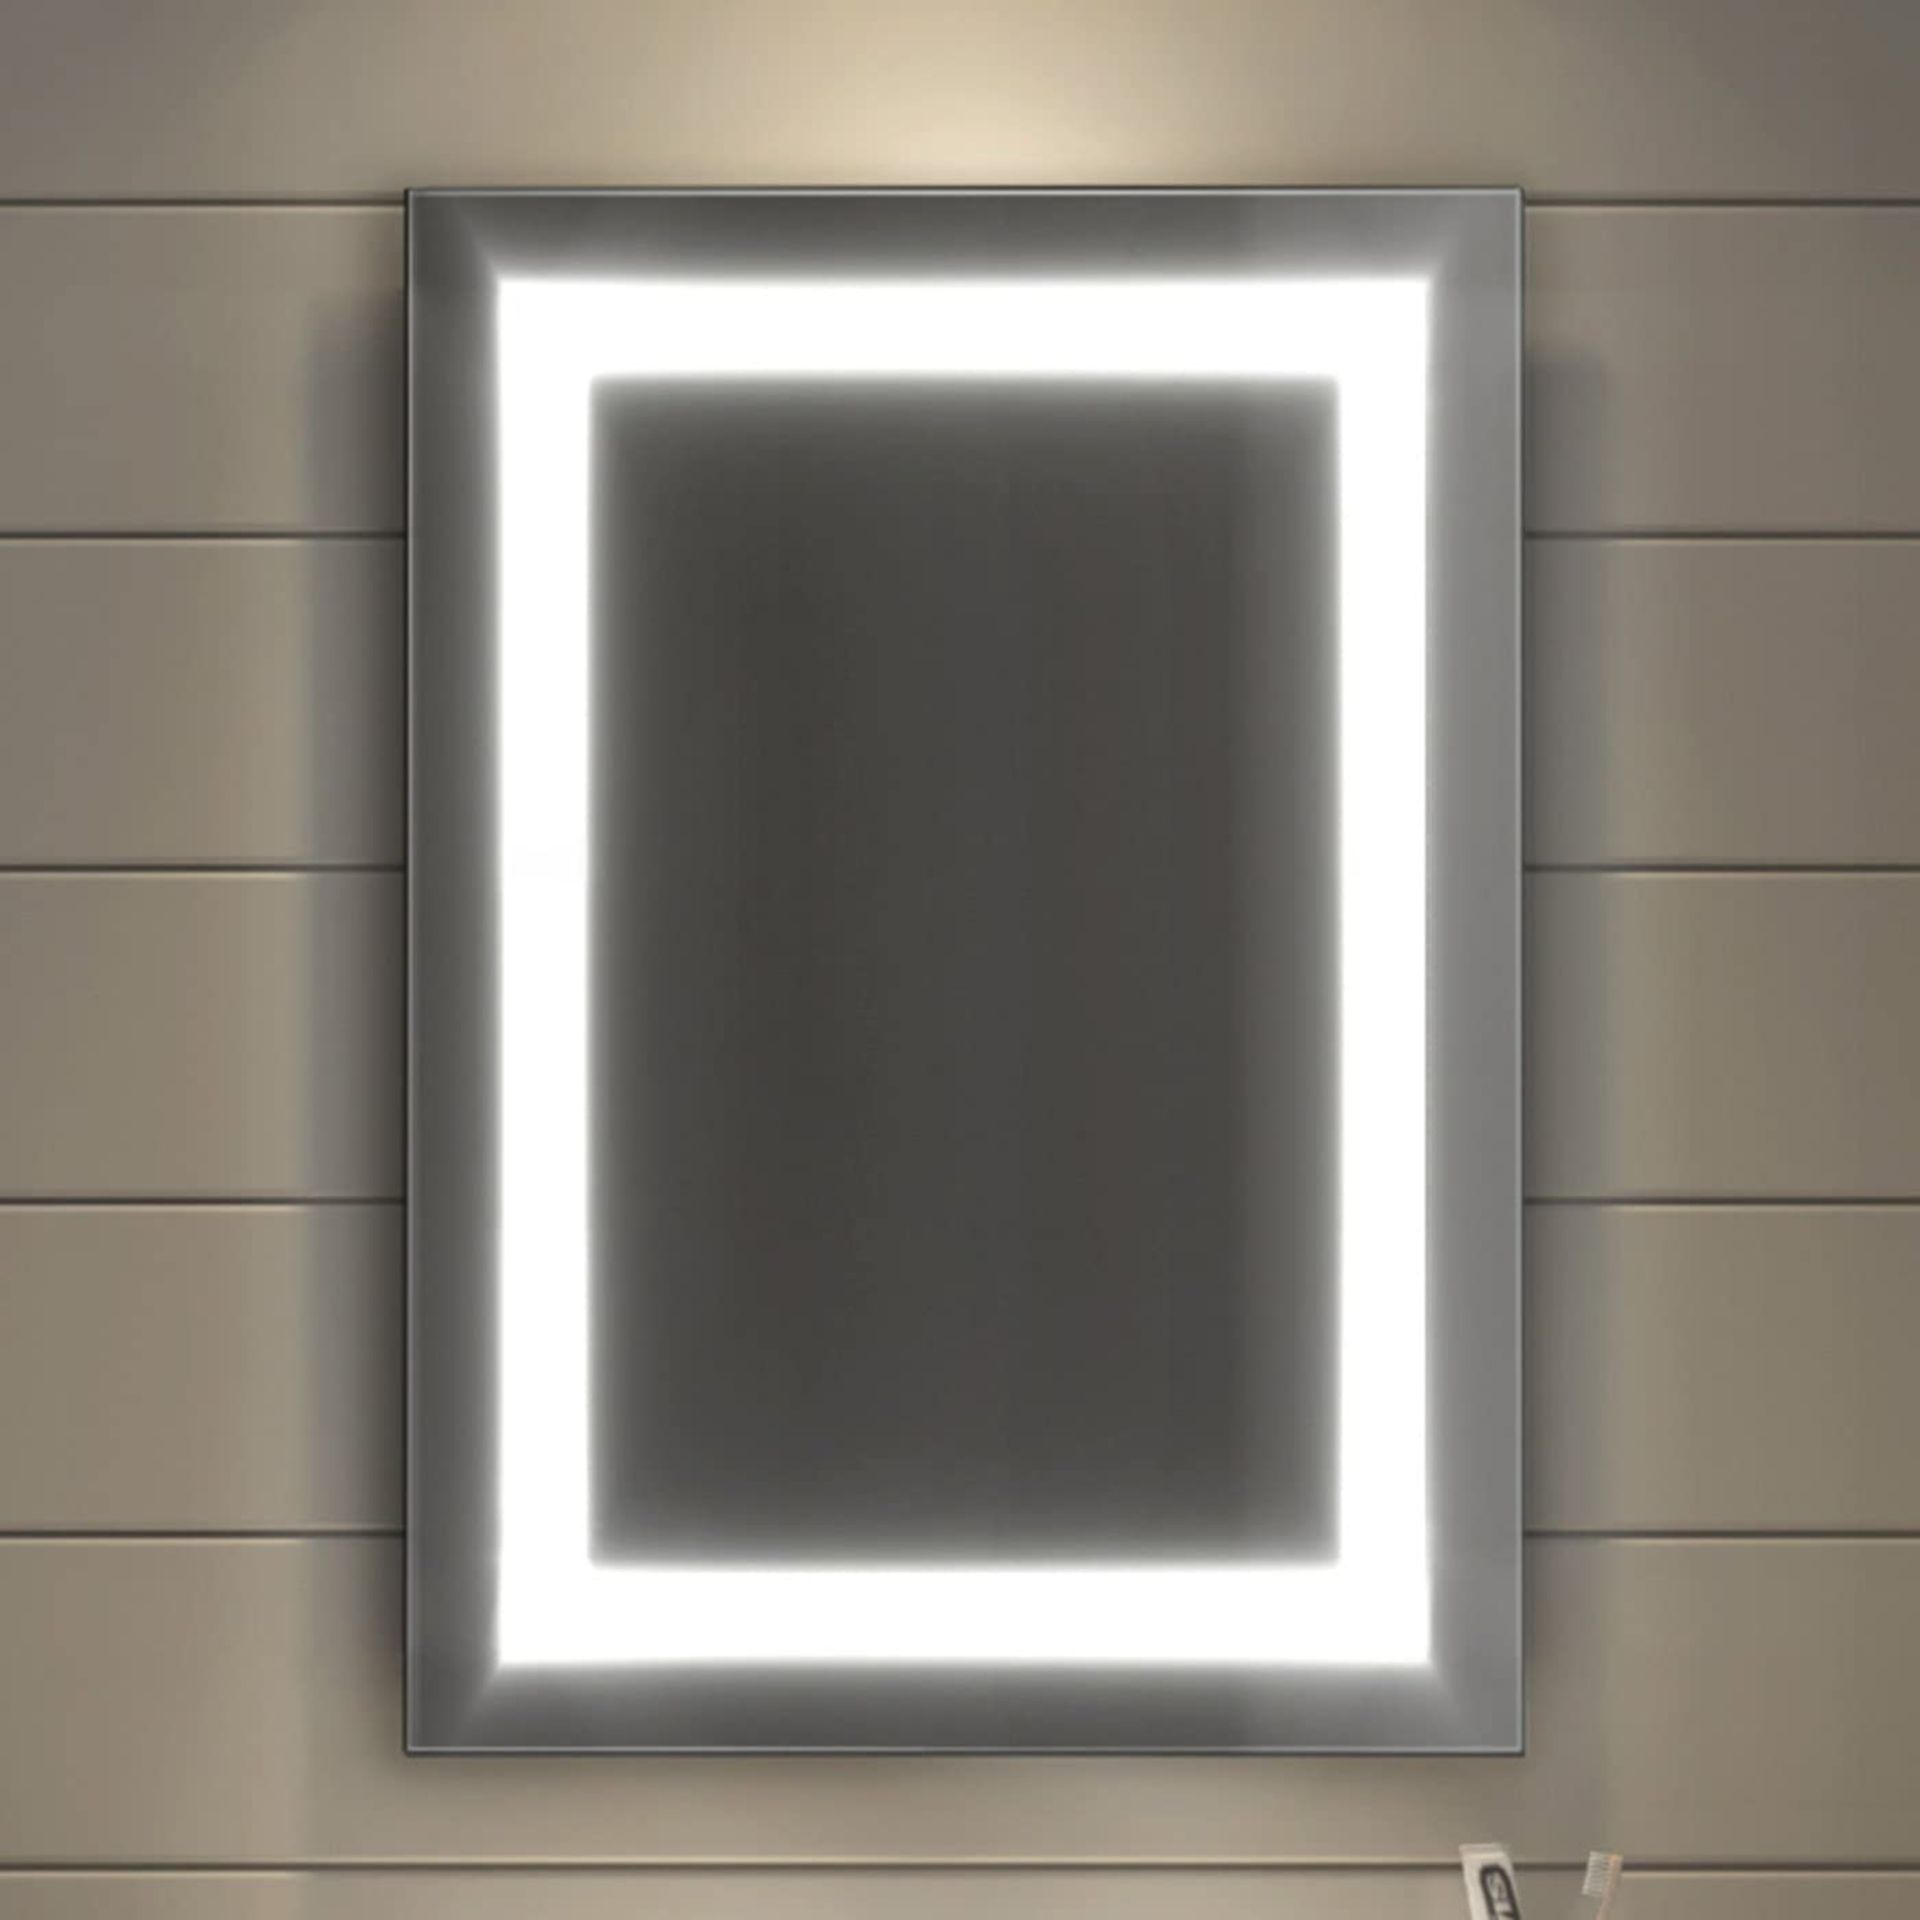 New & Boxed 500x700 mm Modern Illuminated Backlit Led Light Bathroom Mirror + Demister Pad. RRP ...